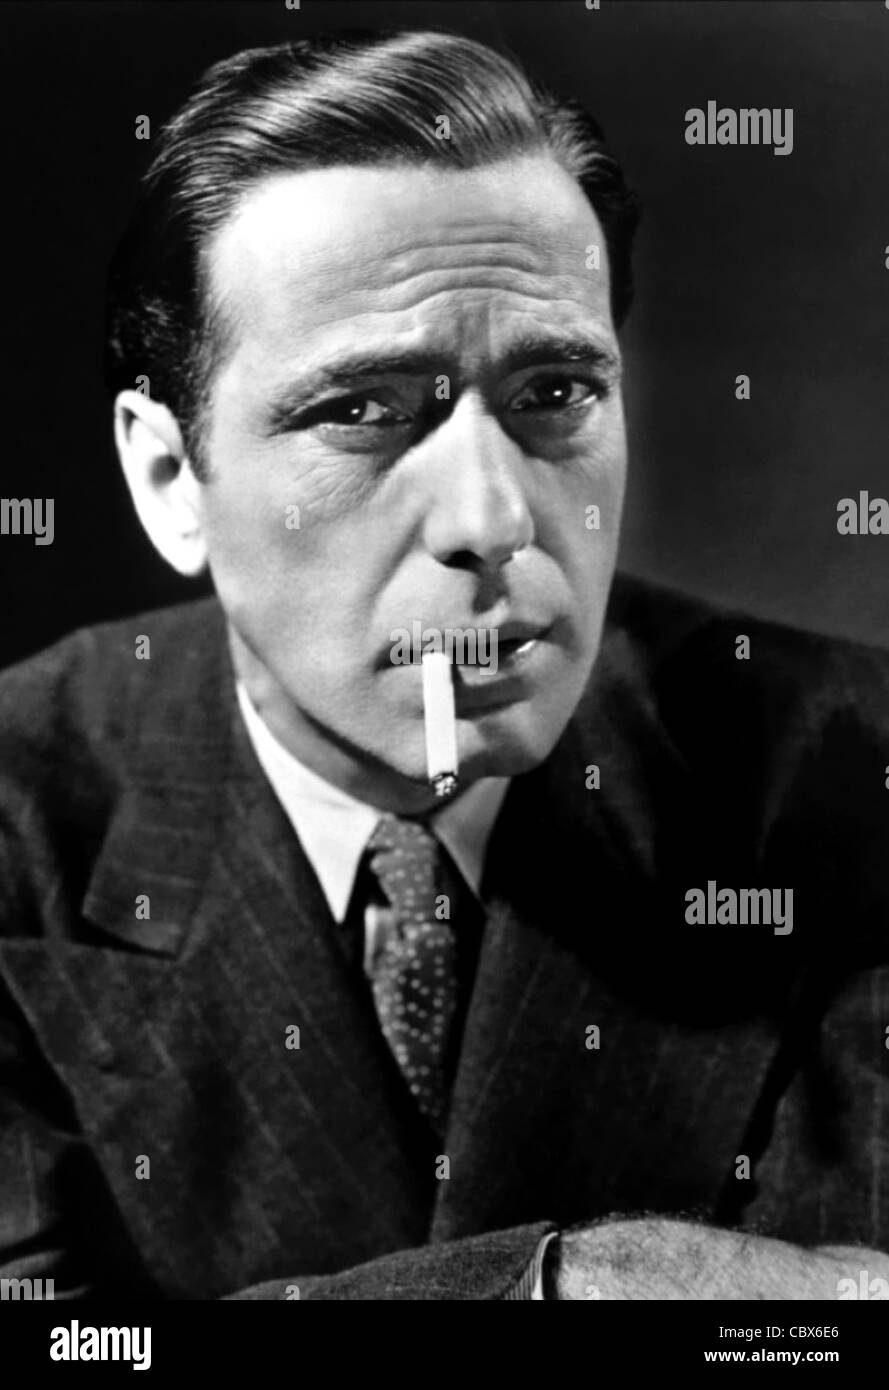 Humphrey Bogart portrait with cigarette Stock Photo